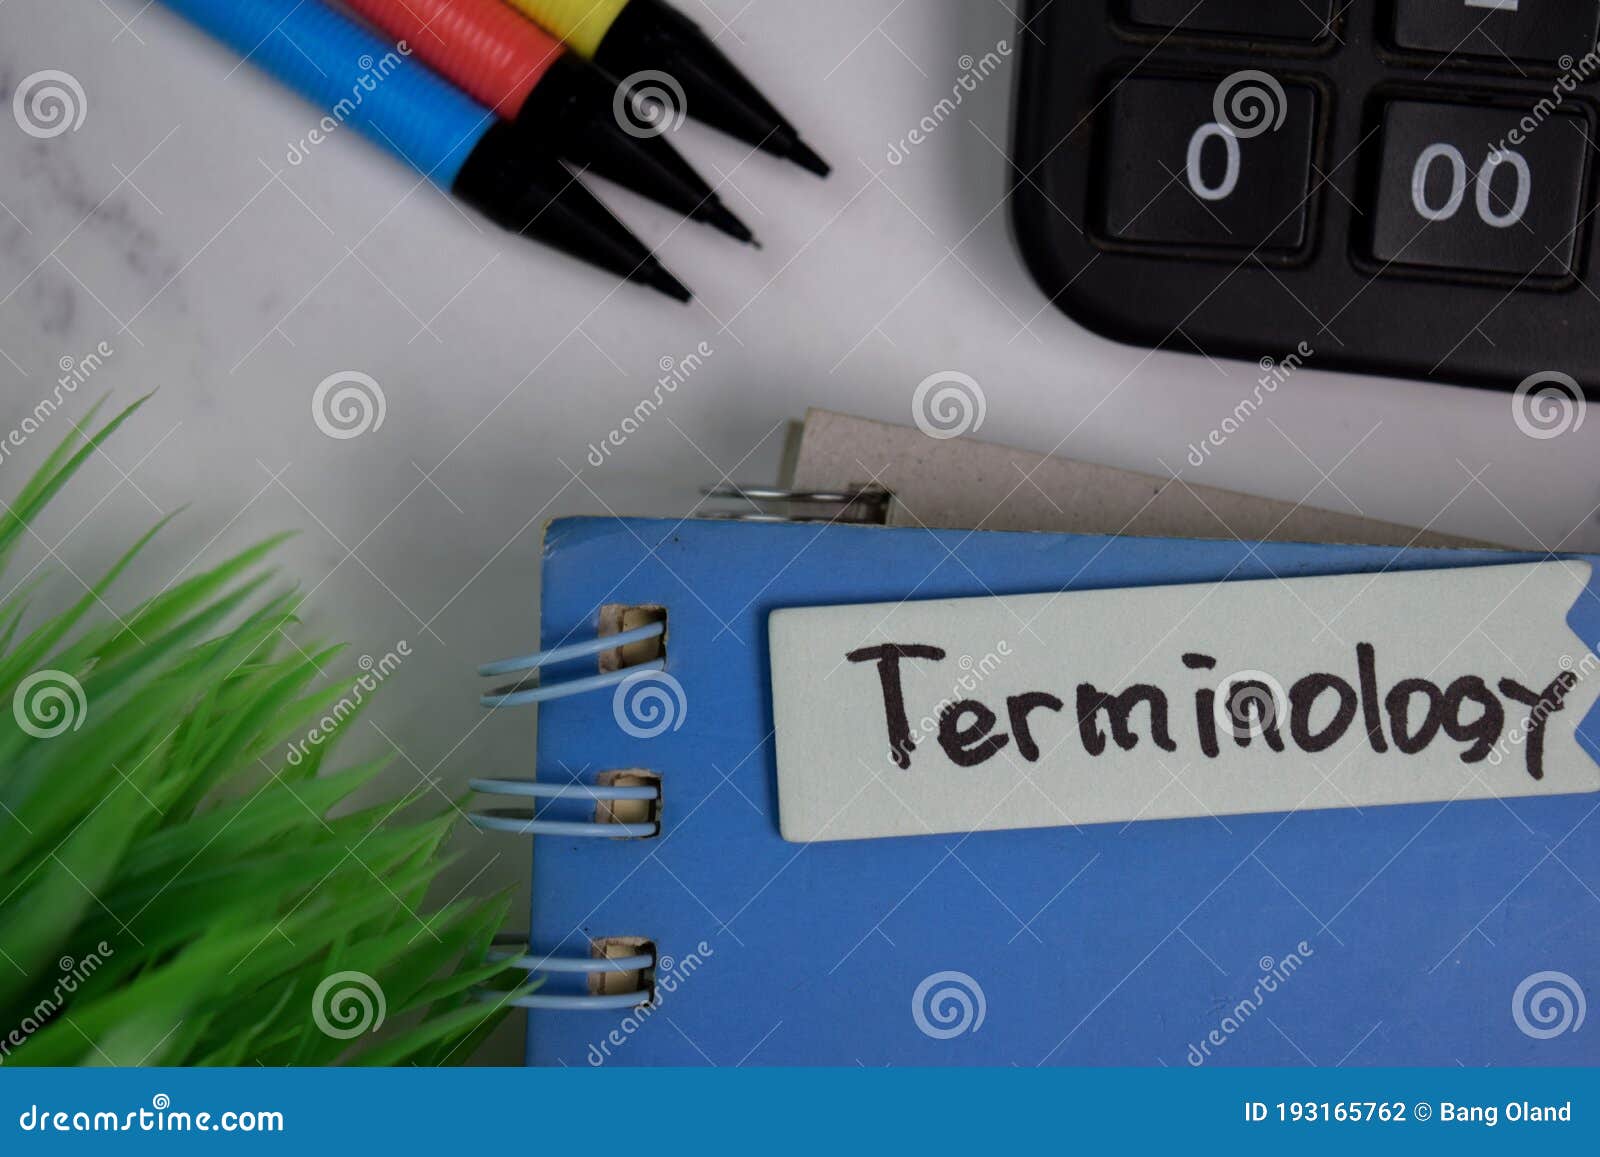 terminology write on sticky notes  on office desk